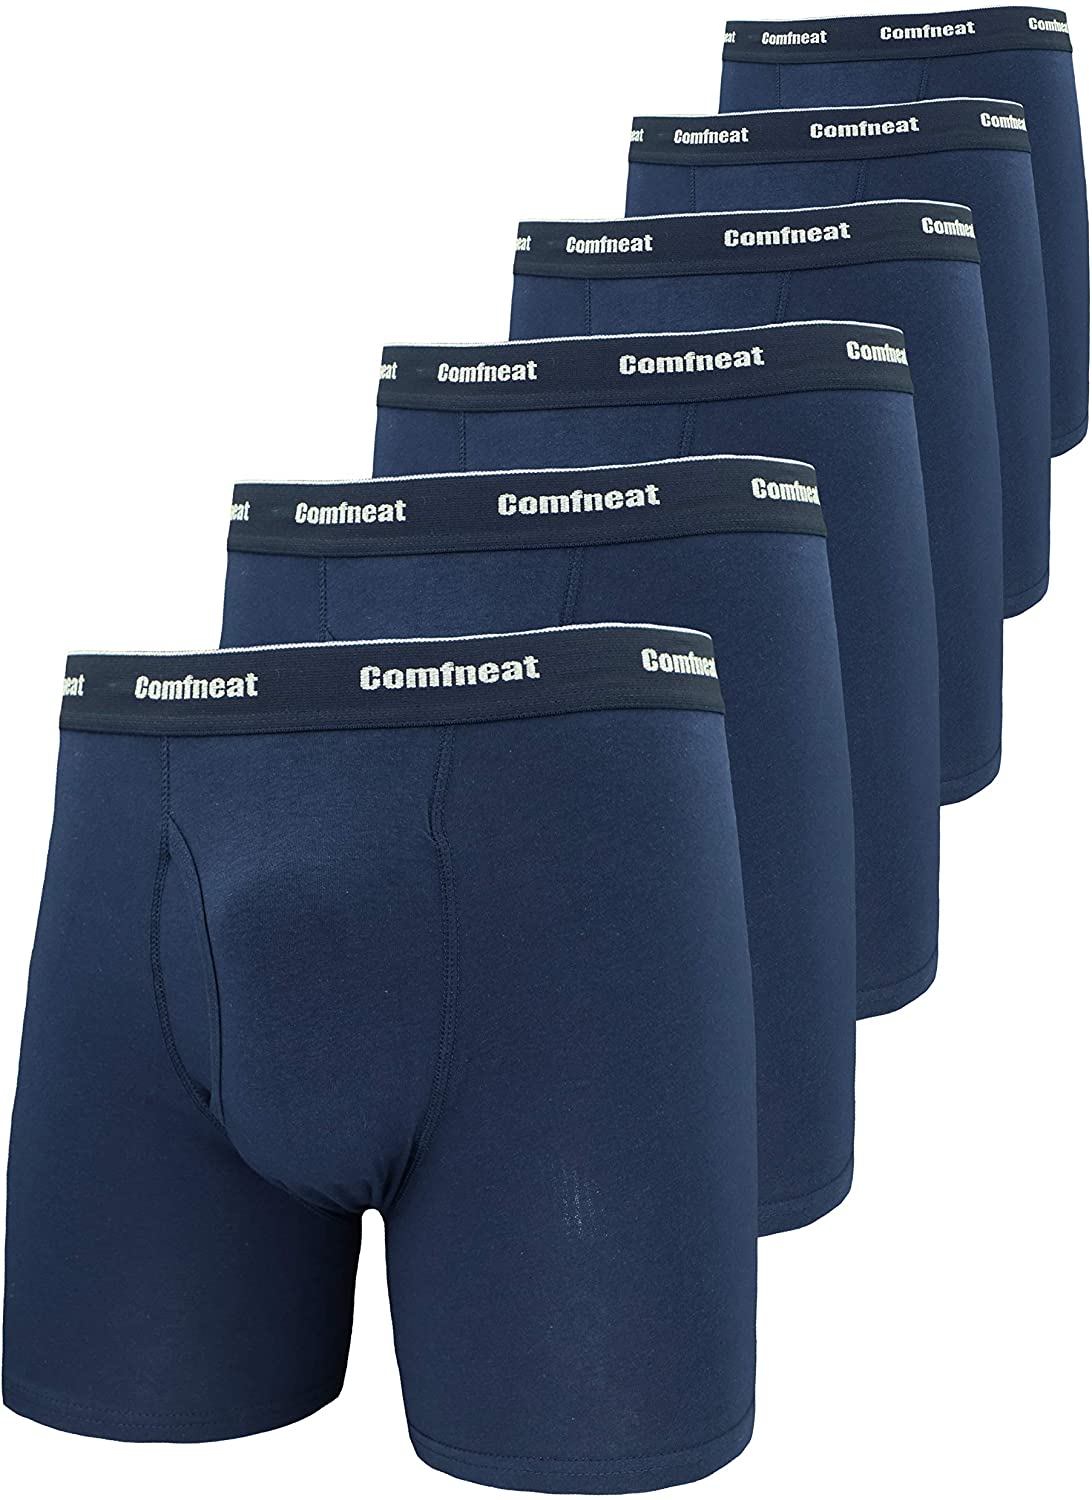 DANISH ENDURANCE 6 Pack Cotton Boxer Shorts, Stretchy & Soft